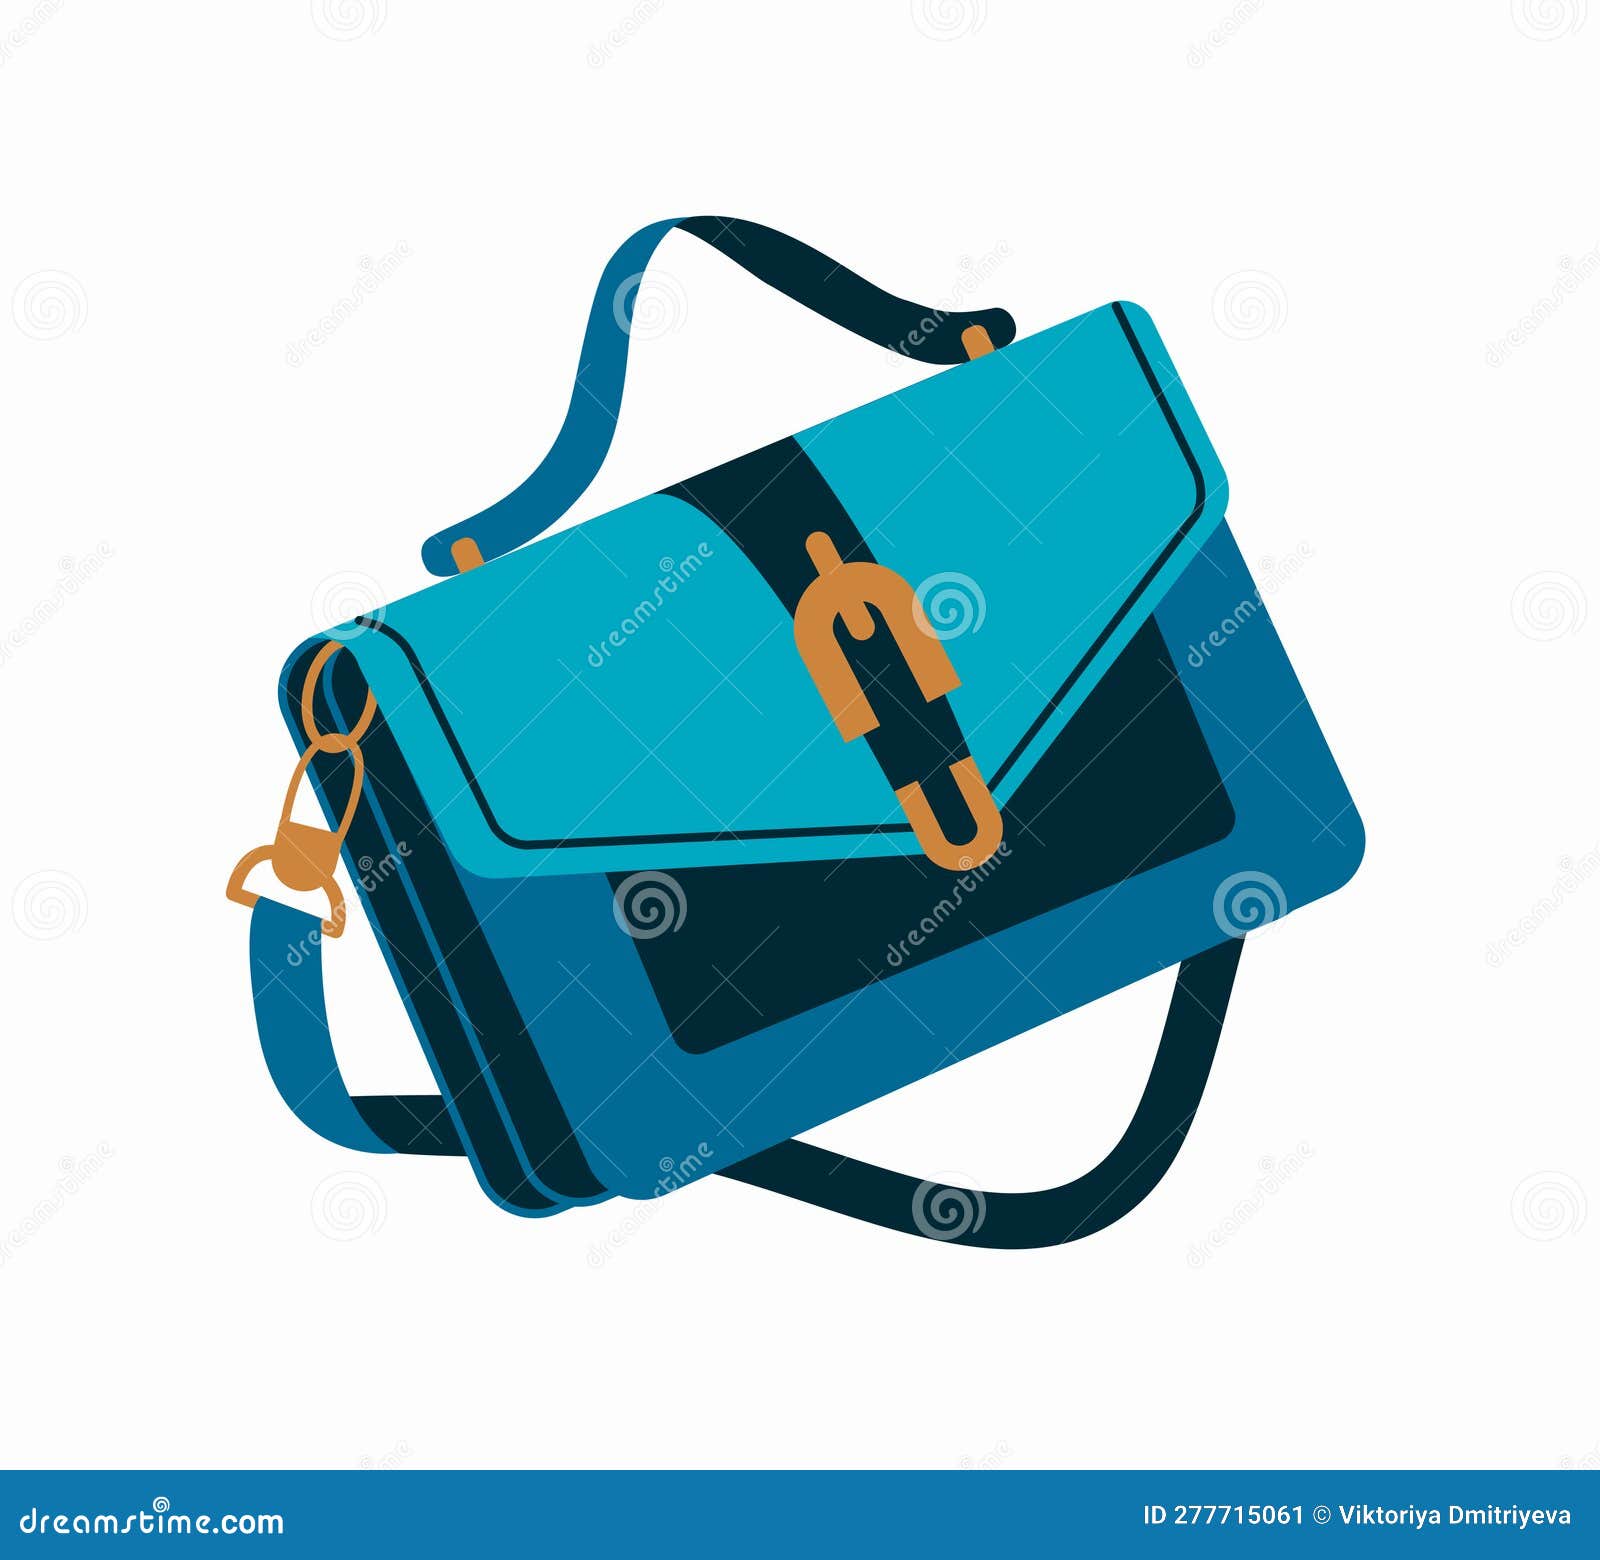 Women Fashion Clutch Leather Purse or Bag vector illustration. Beauty  fashion objects icon concept. Modern rectangular evening handbag vector  design. 31769824 Vector Art at Vecteezy